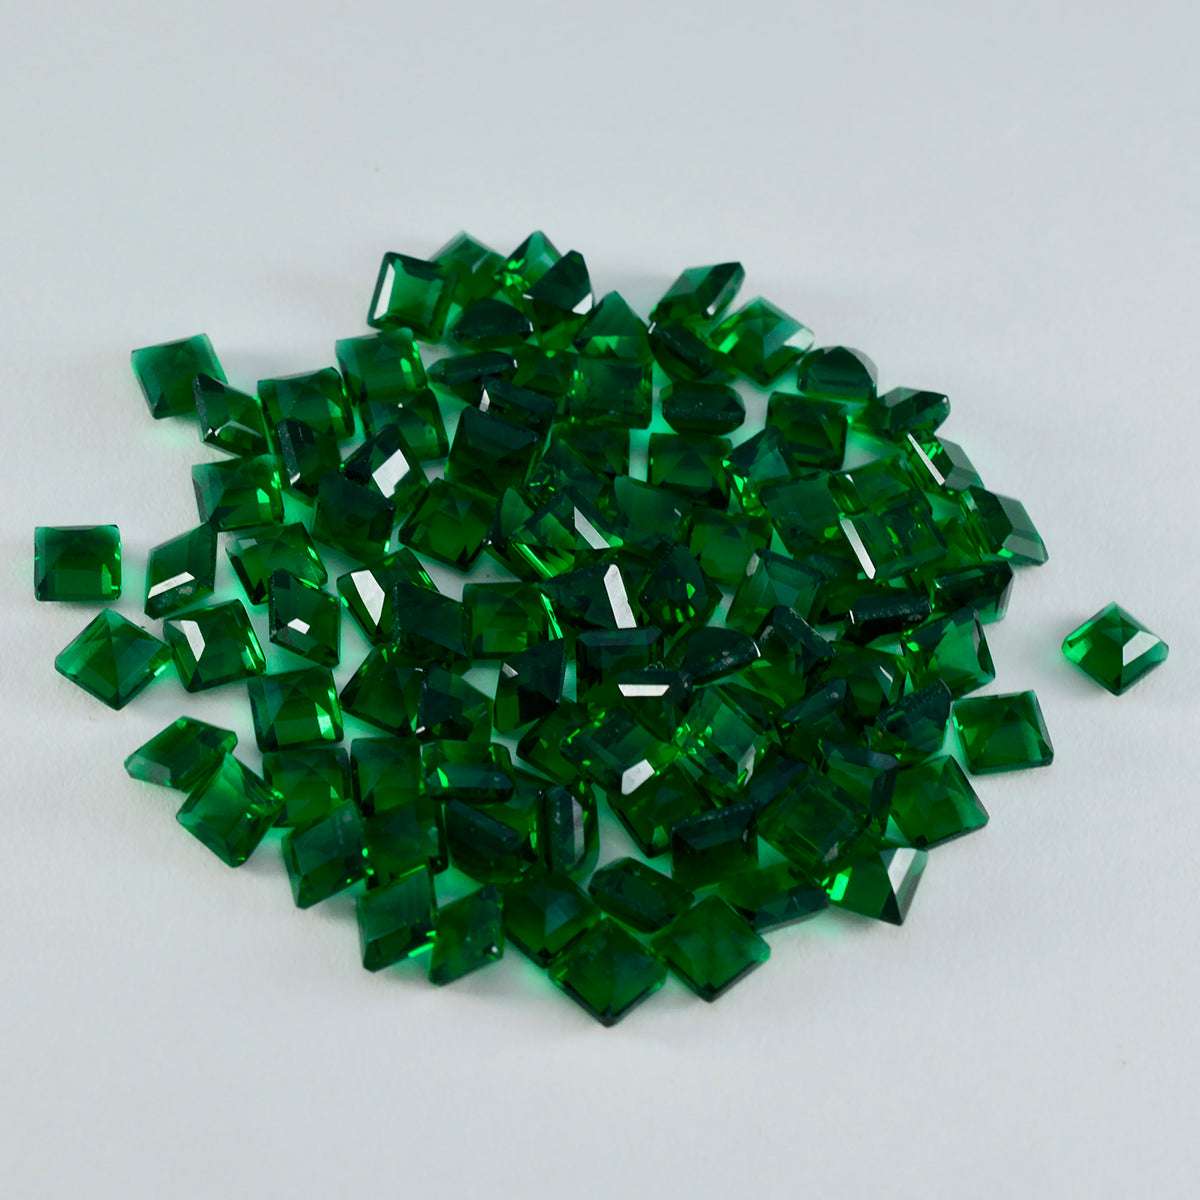 Riyogems 1 Stück grüner Smaragd, CZ, facettiert, 3 x 3 mm, quadratische Form, hübscher, hochwertiger, loser Edelstein